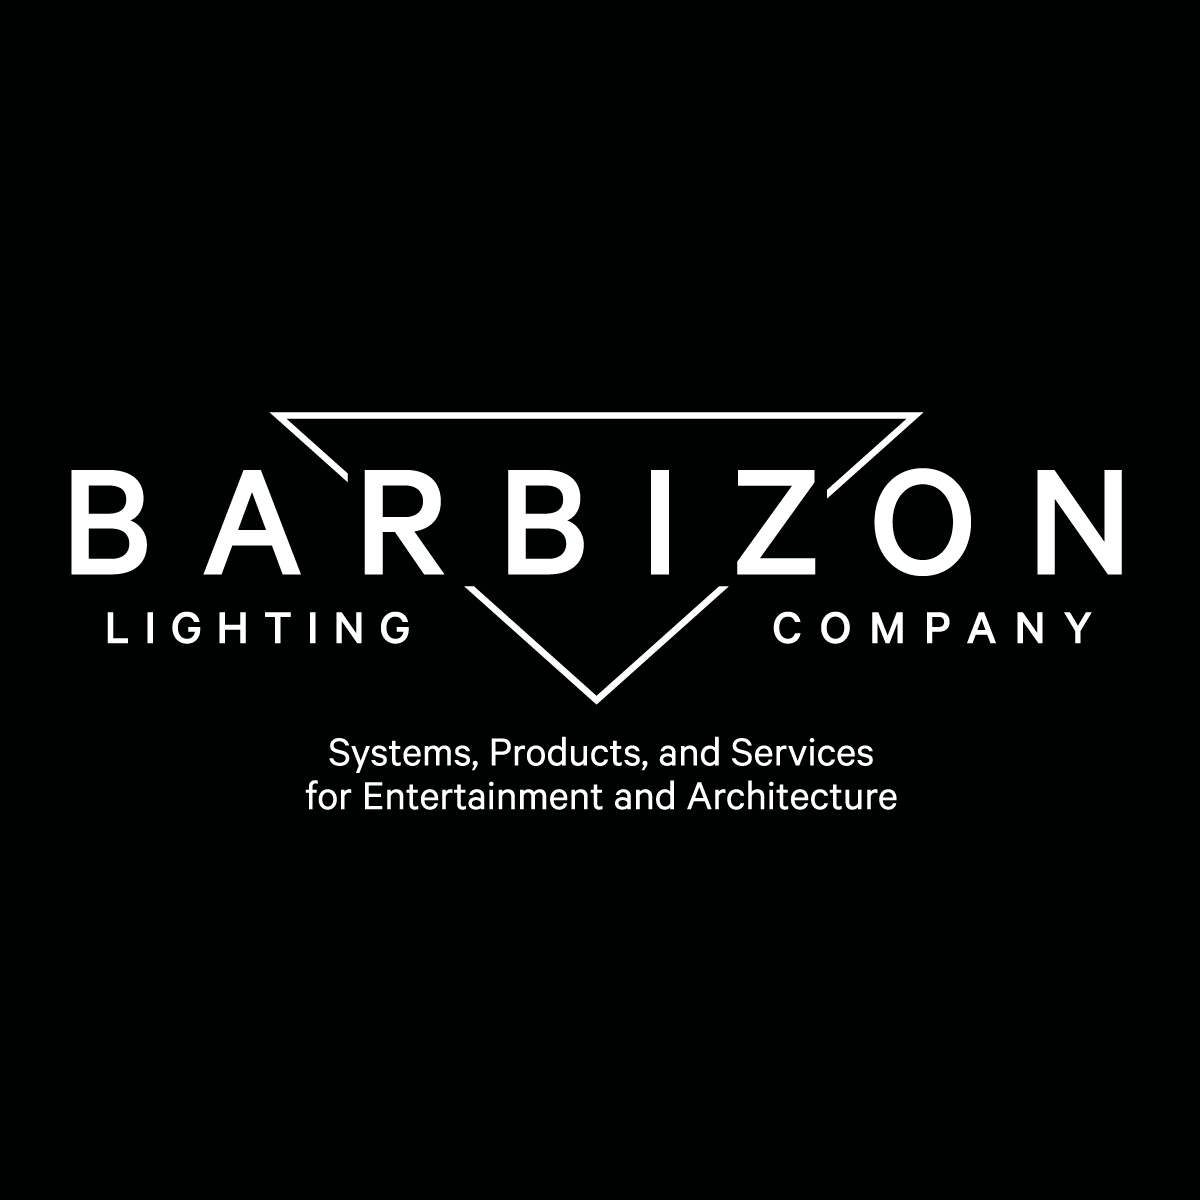 Barbizon Lighting Company